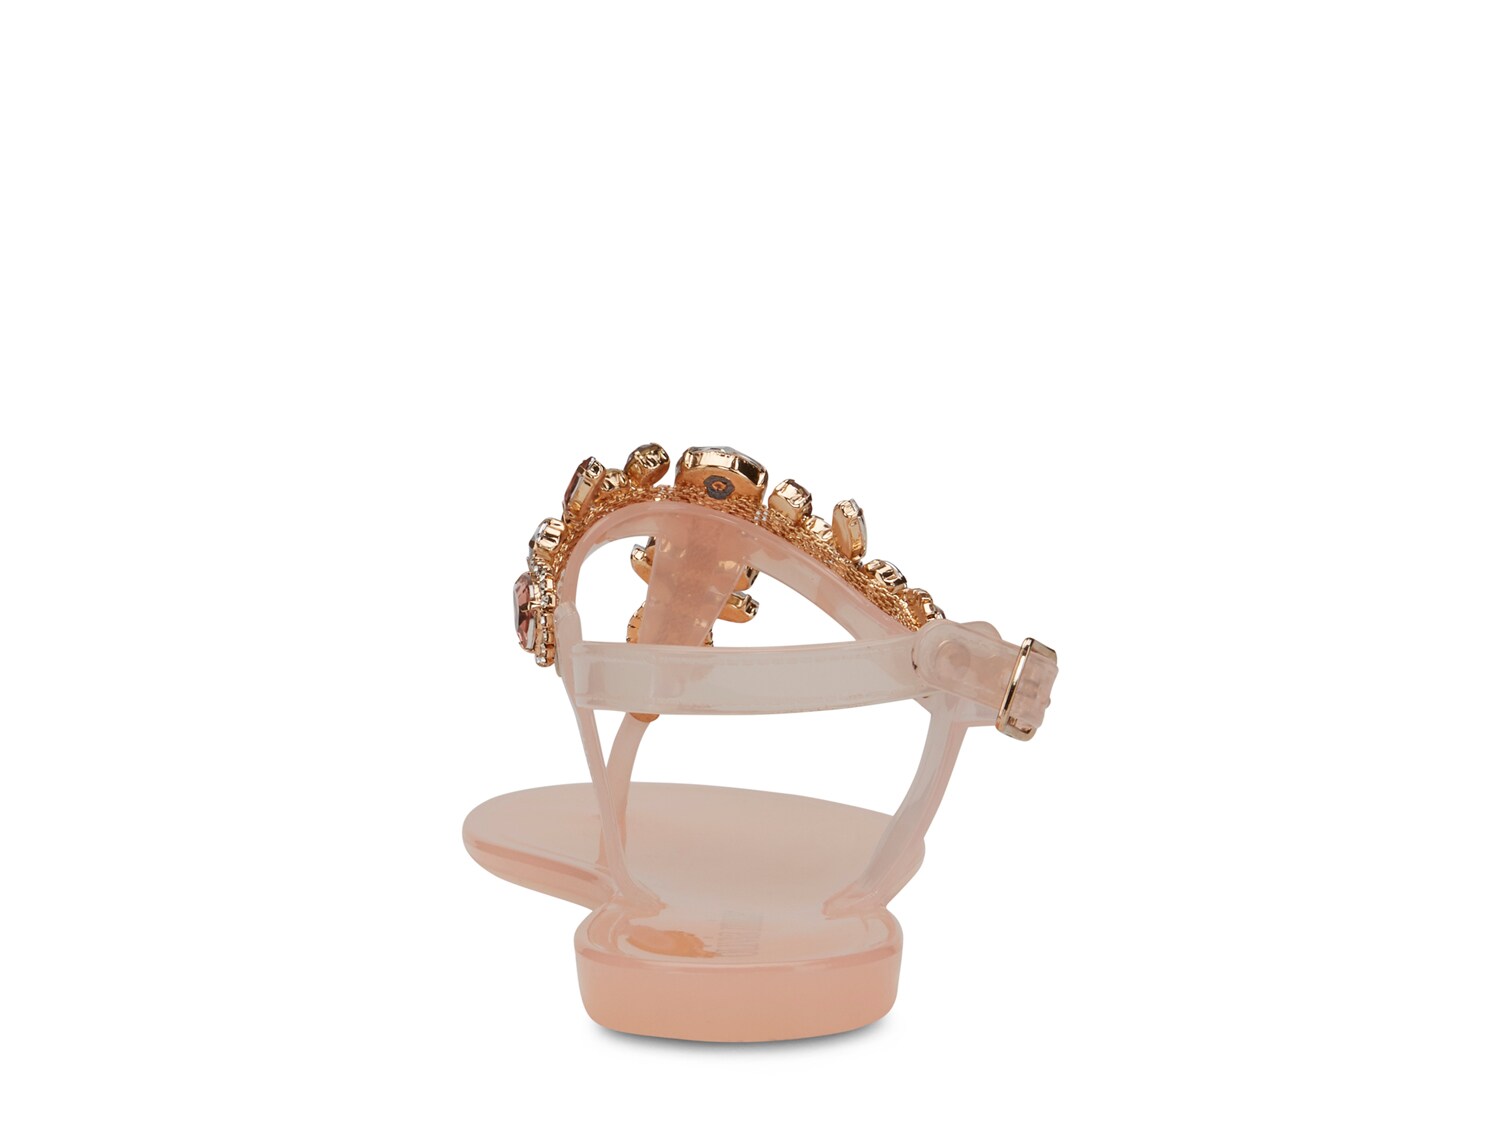 olivia miller pop rox jelly sandal